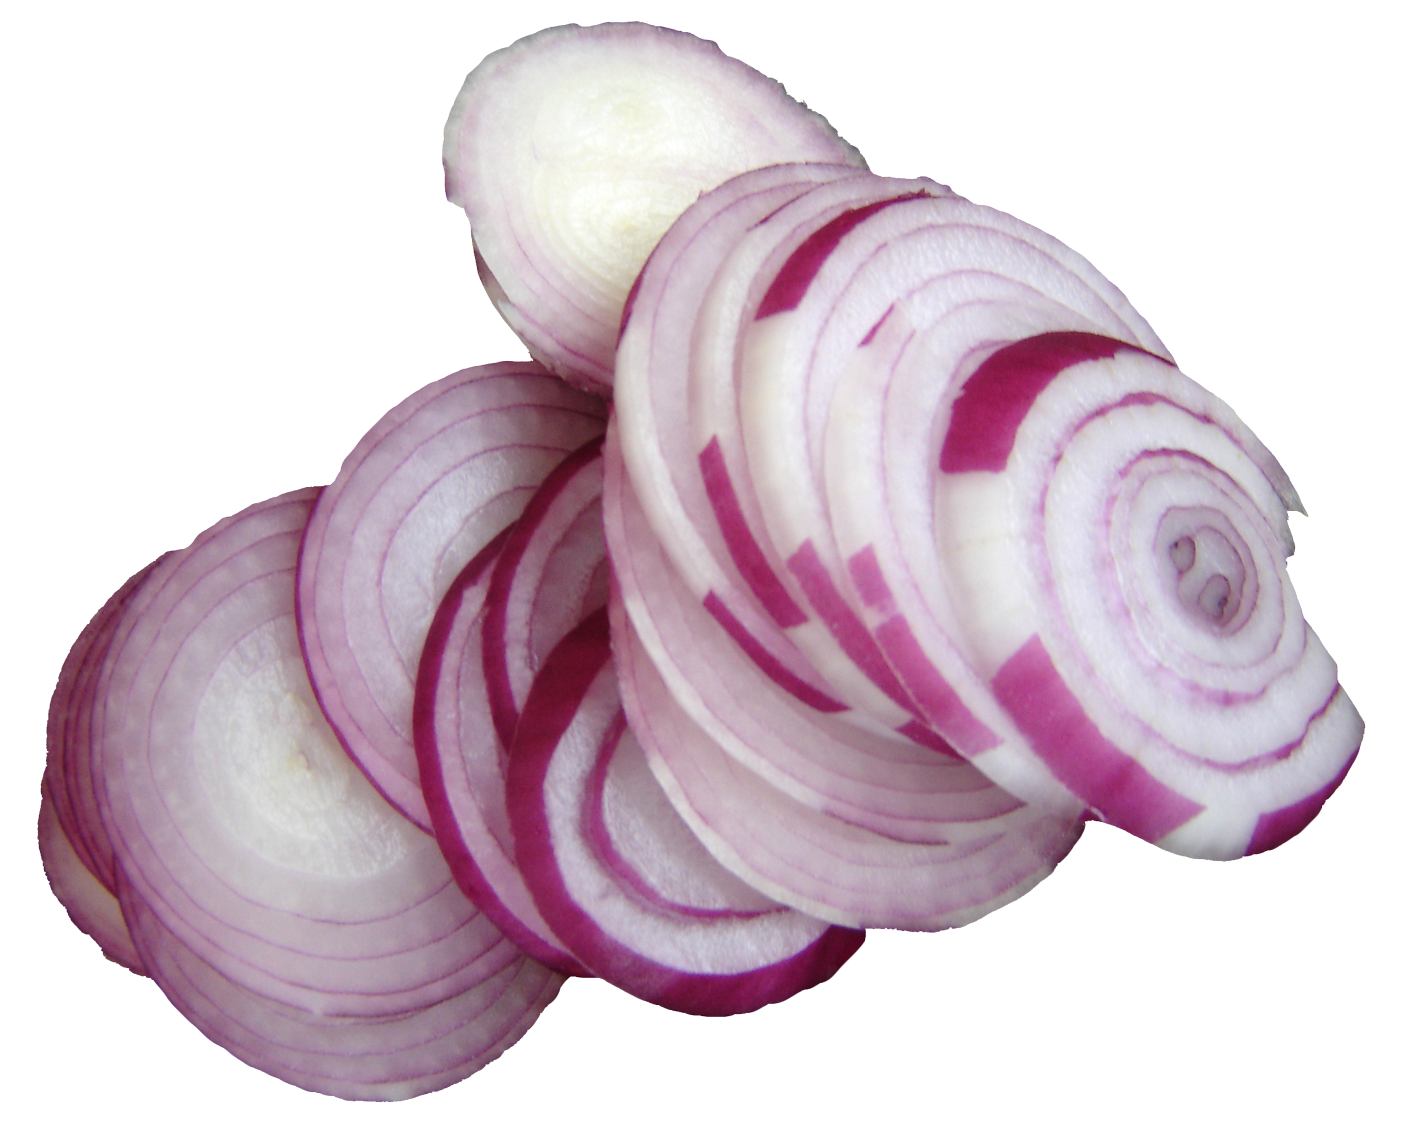 sliced onion png image pngpix #22132